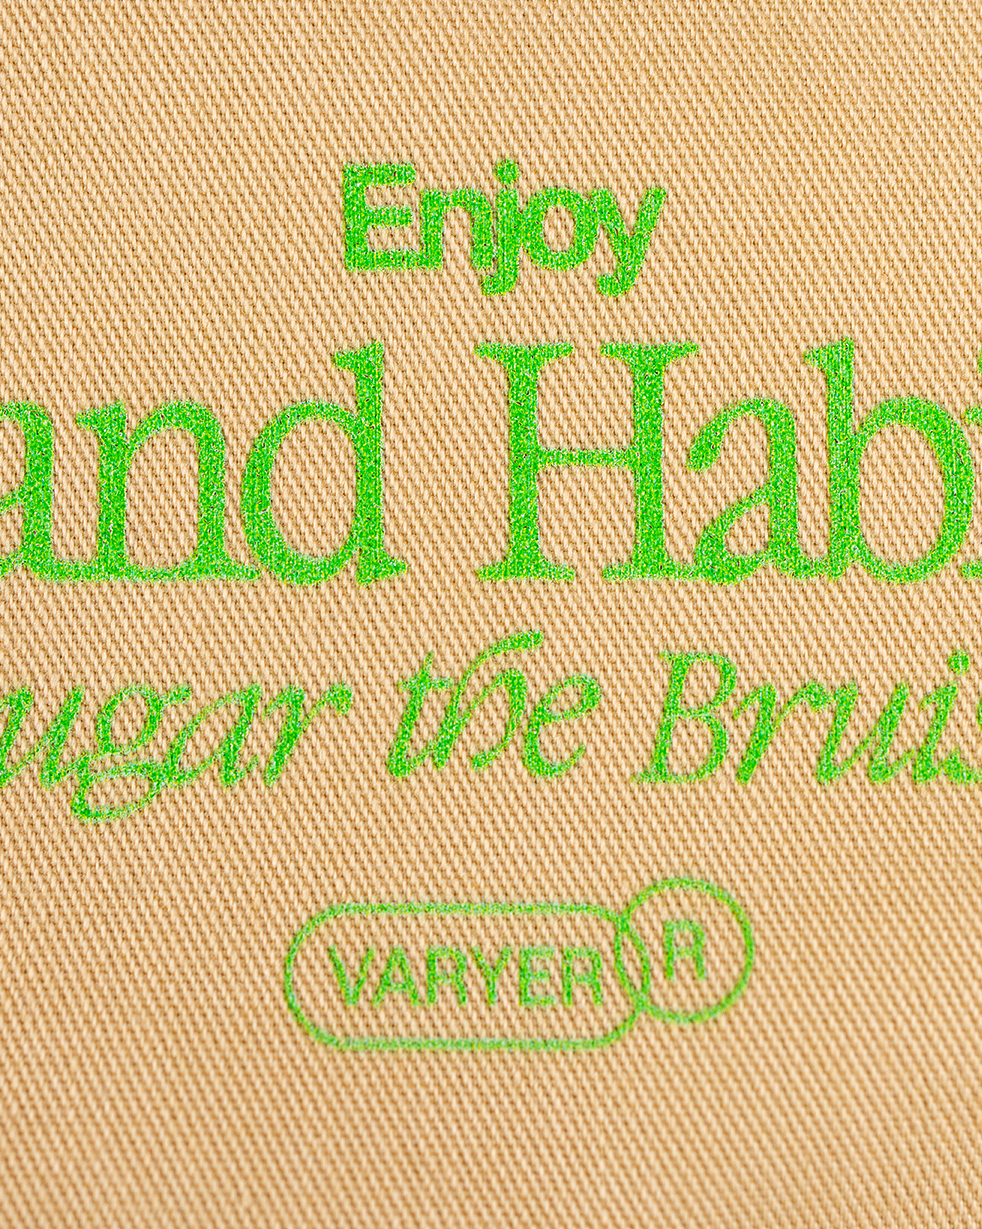 Varyer + Hand Habits Apron